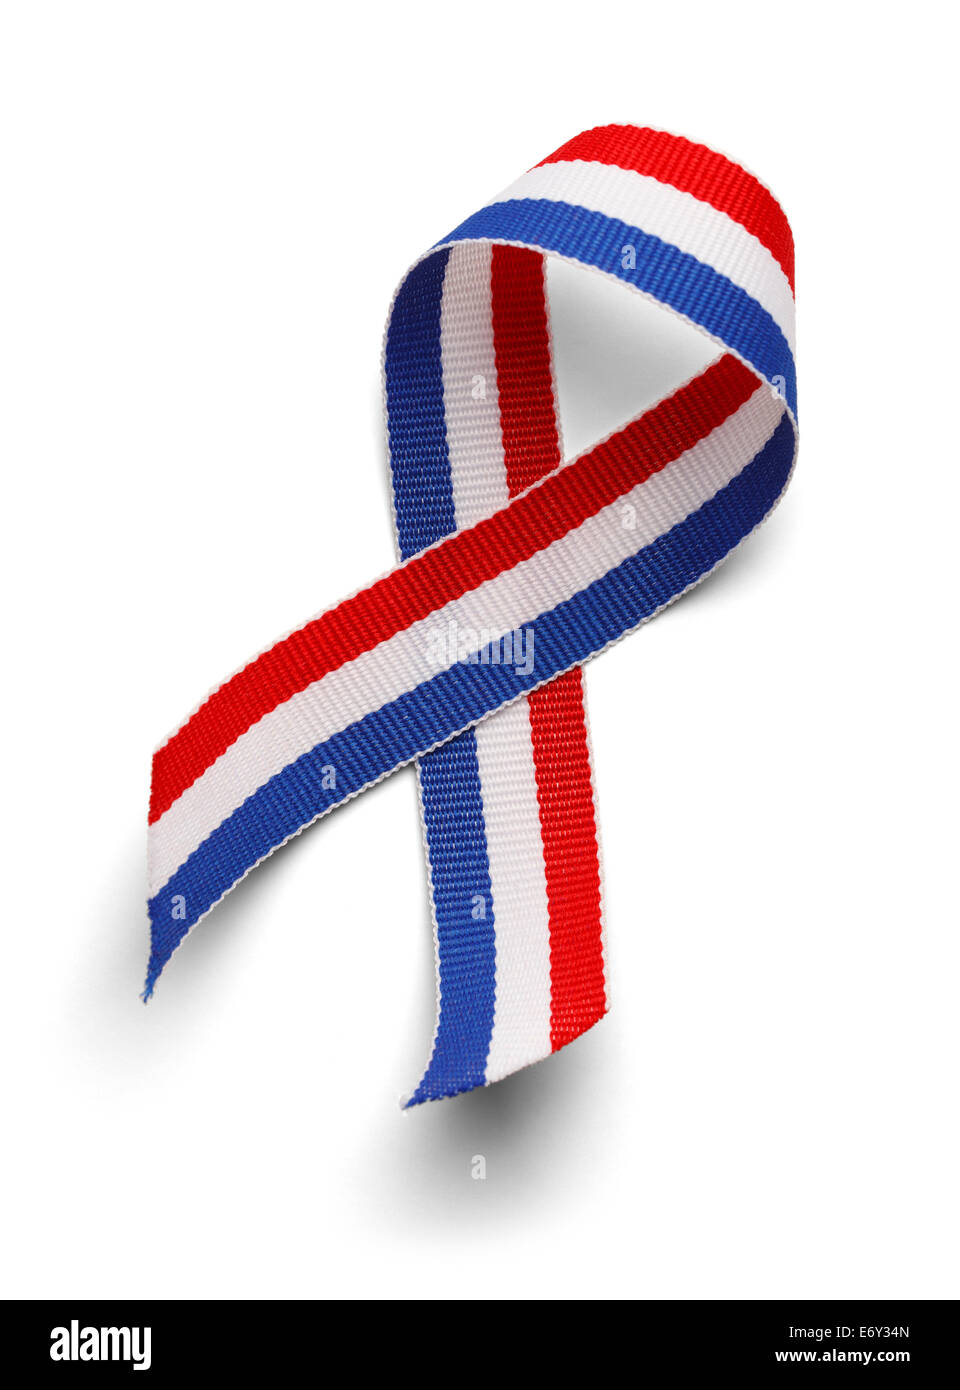 USA Support Ribbon Isolated on White Background. Stock Photo